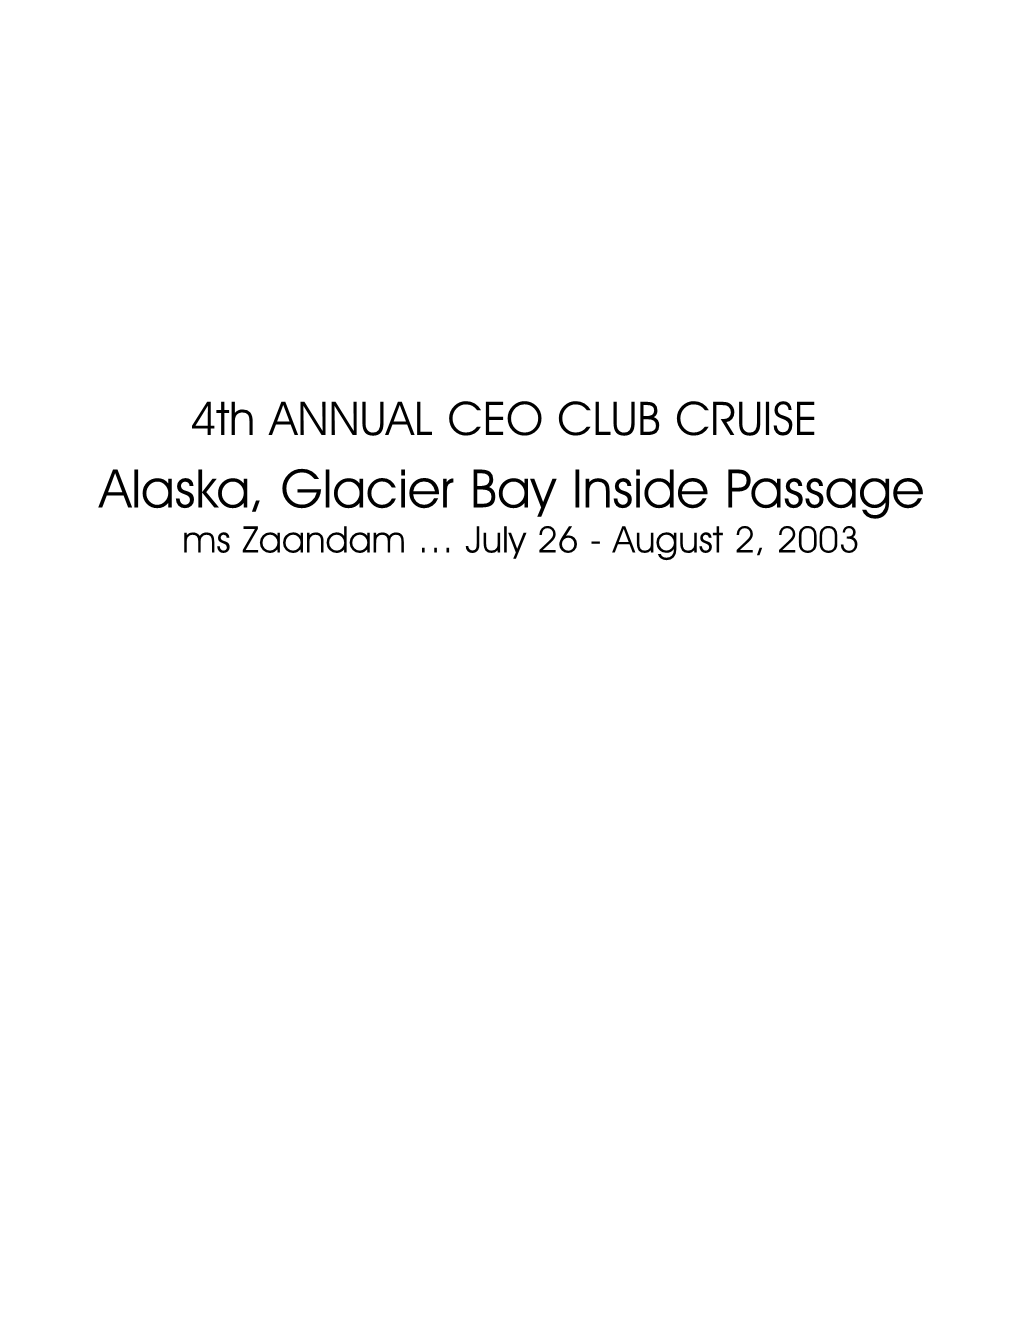 Alaska, Glacier Bay Inside Passage Ms Zaandam … July 26 - August 2, 2003 7-Day Glacier Bay Inside Passage Cruise Ms Zaandam July 26 - August 2, 2003